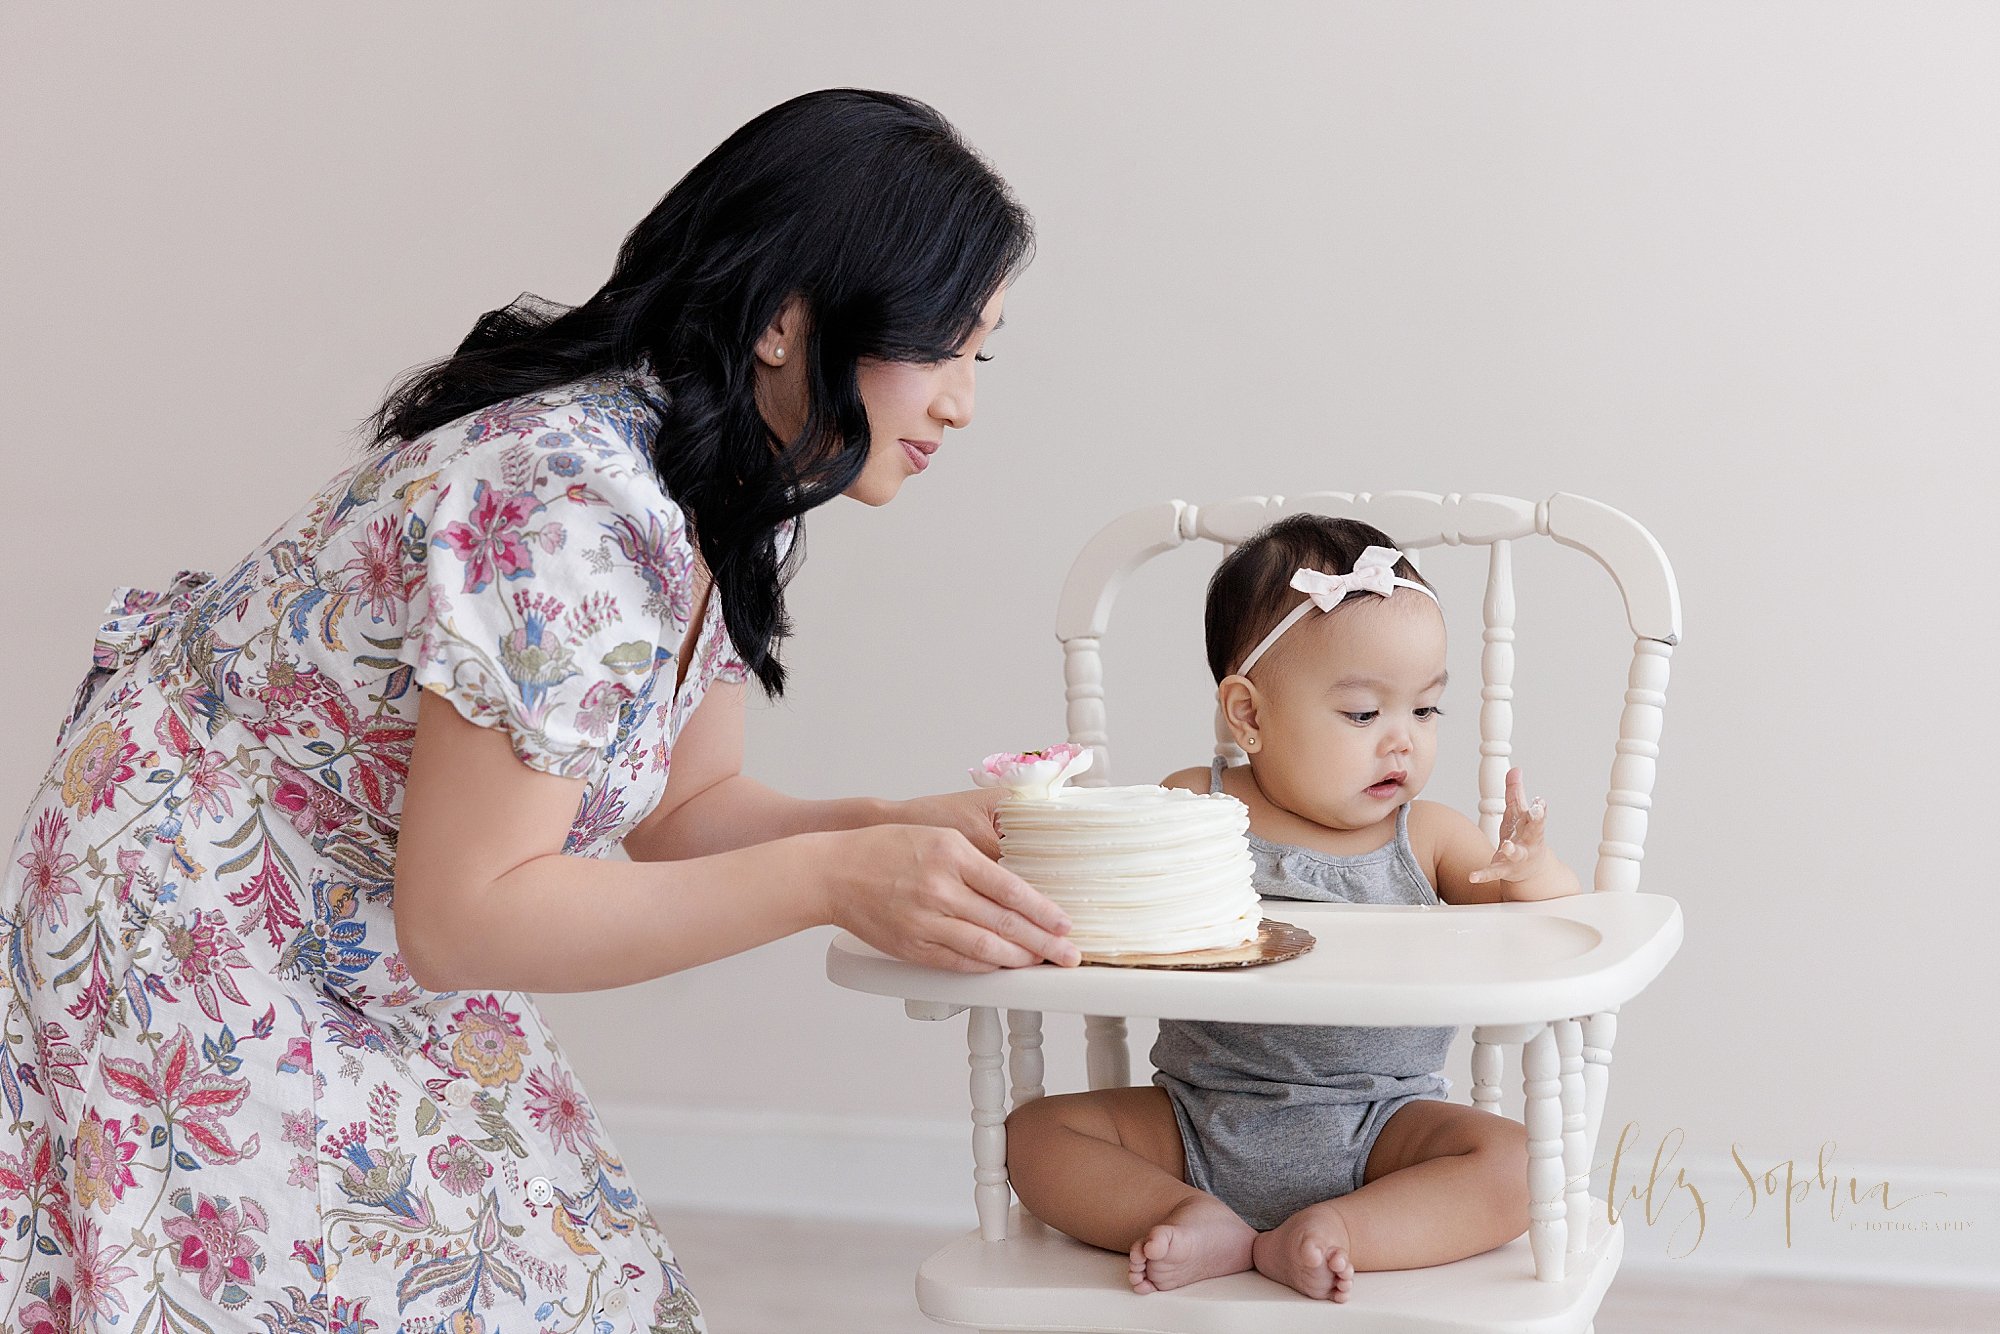 intown-atlanta-decatur-brookhaven-buckhead-first-birthday-cake-smash-photoshoot-baby-girl-family-studio-photos_5315.jpg